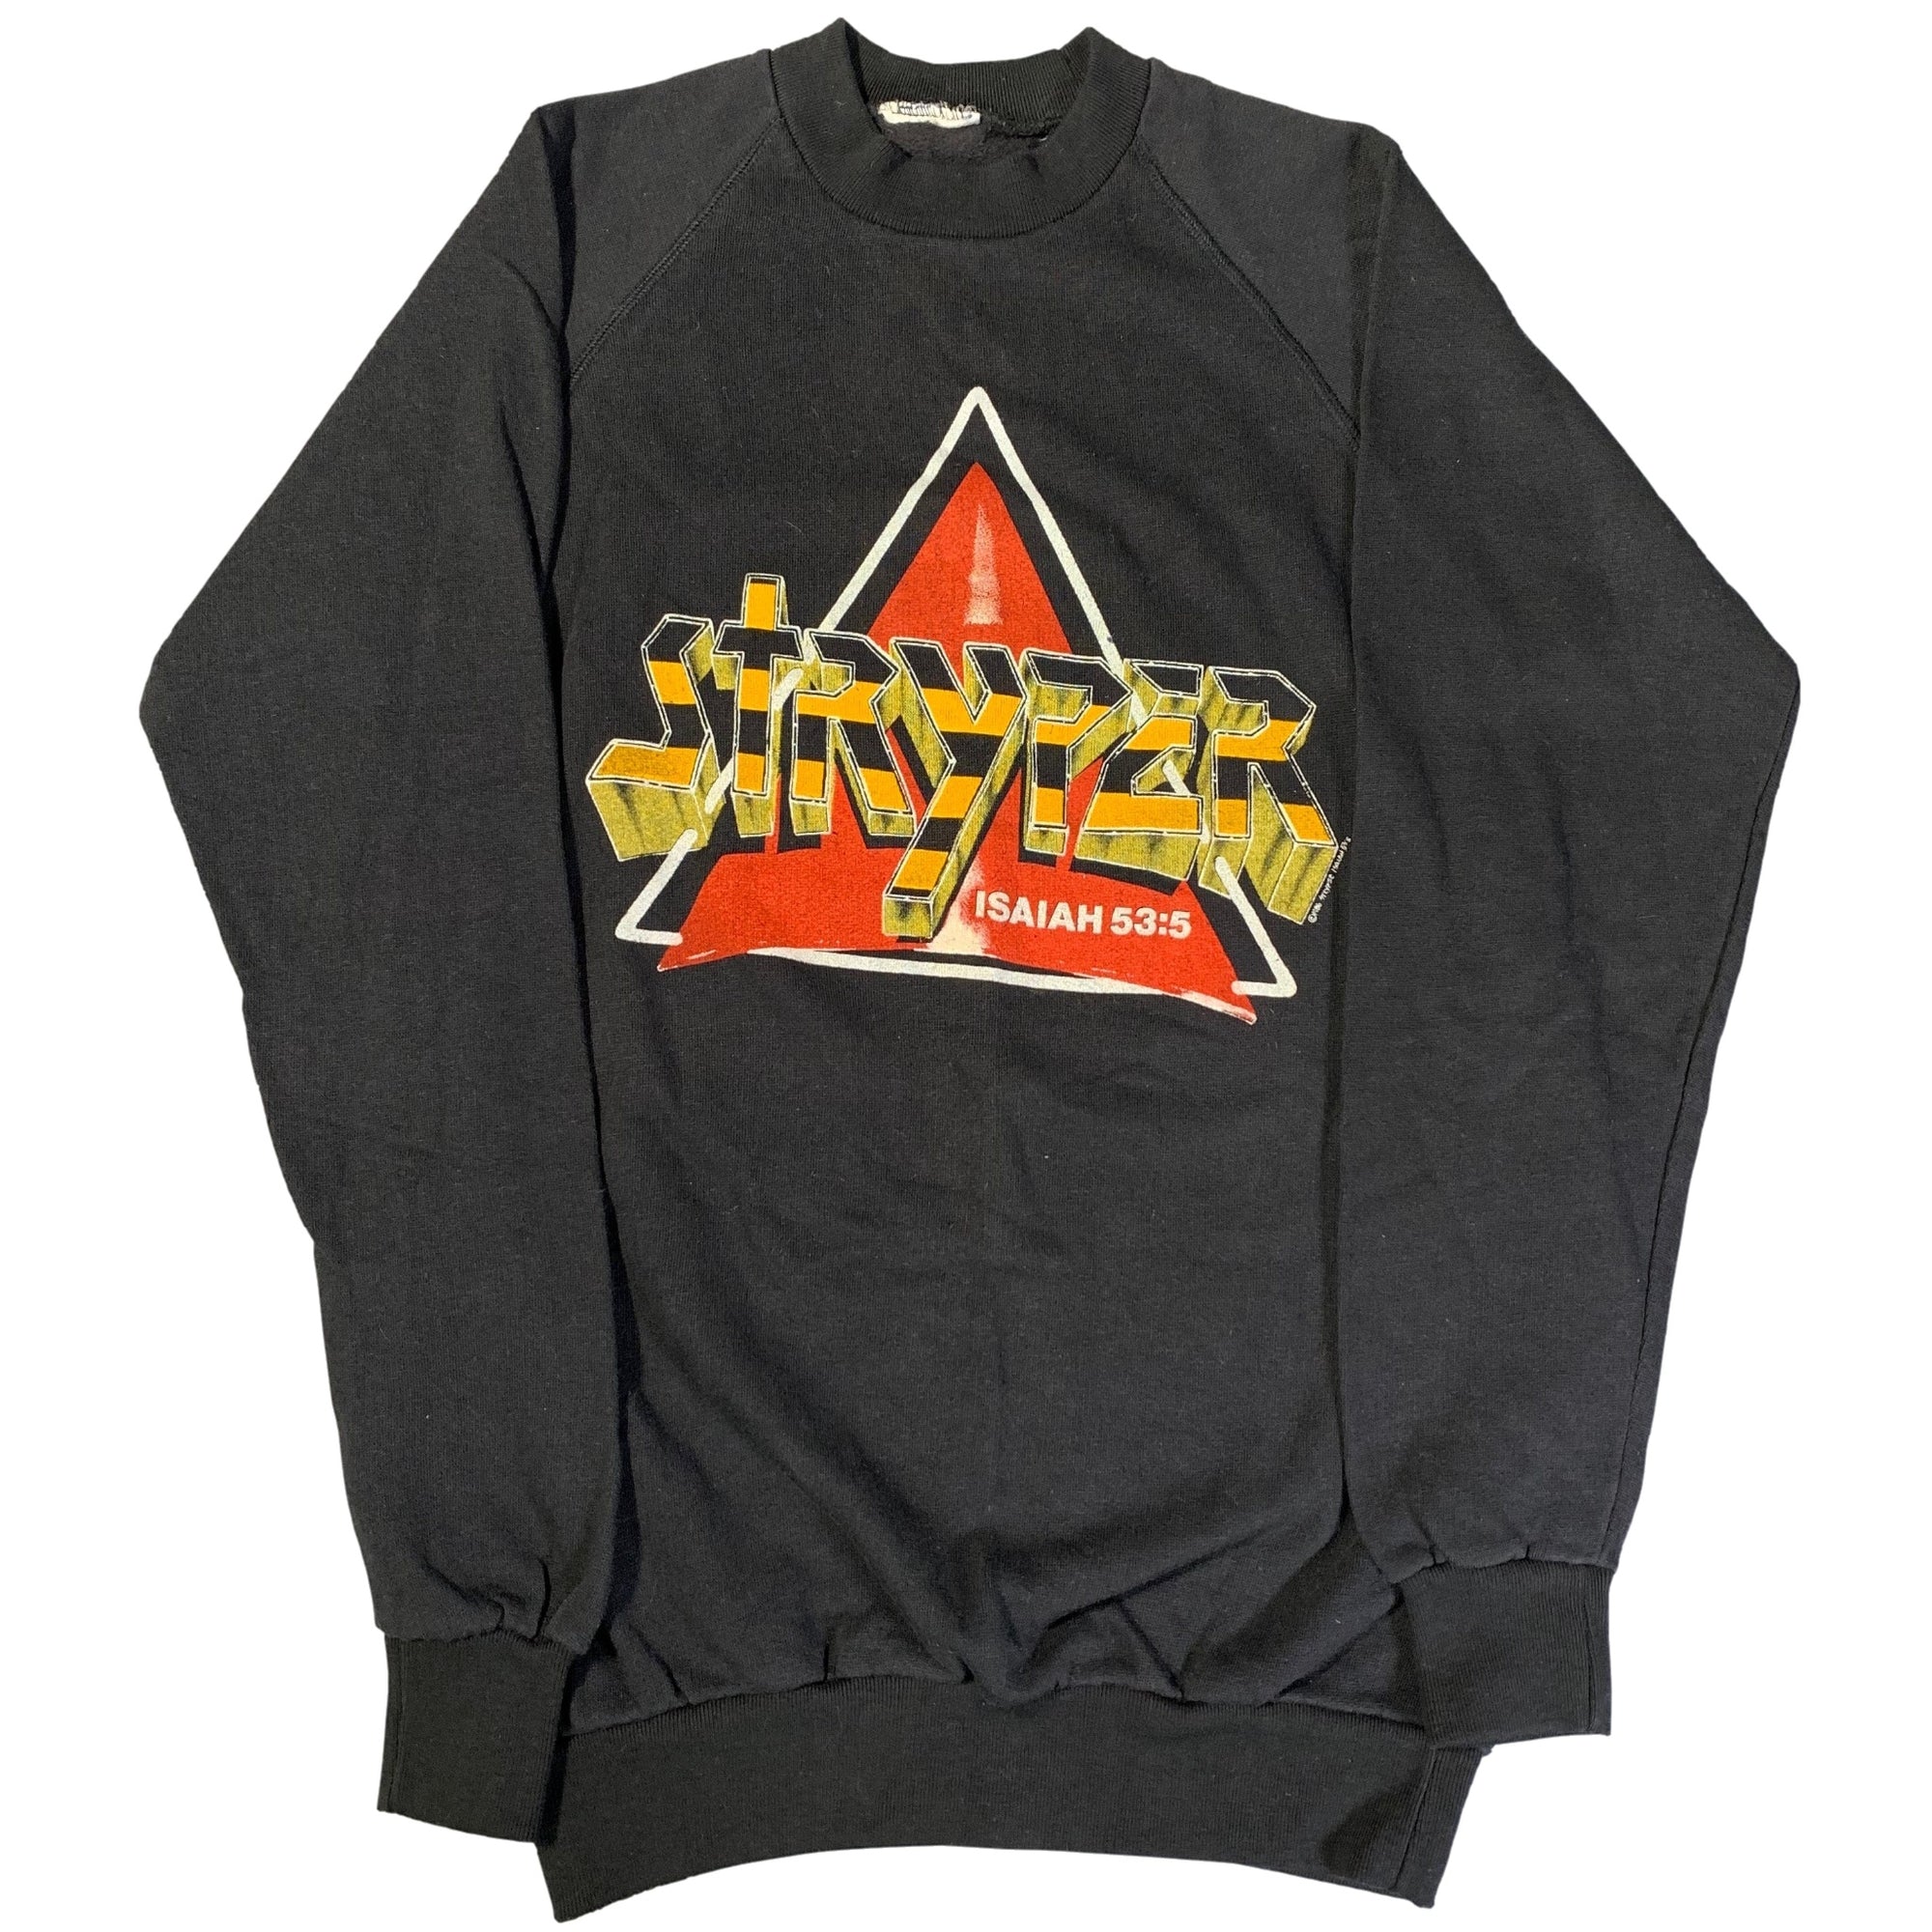 Vintage Stryper "To Hell With The Devil" Crewneck Sweatshirt - jointcustodydc